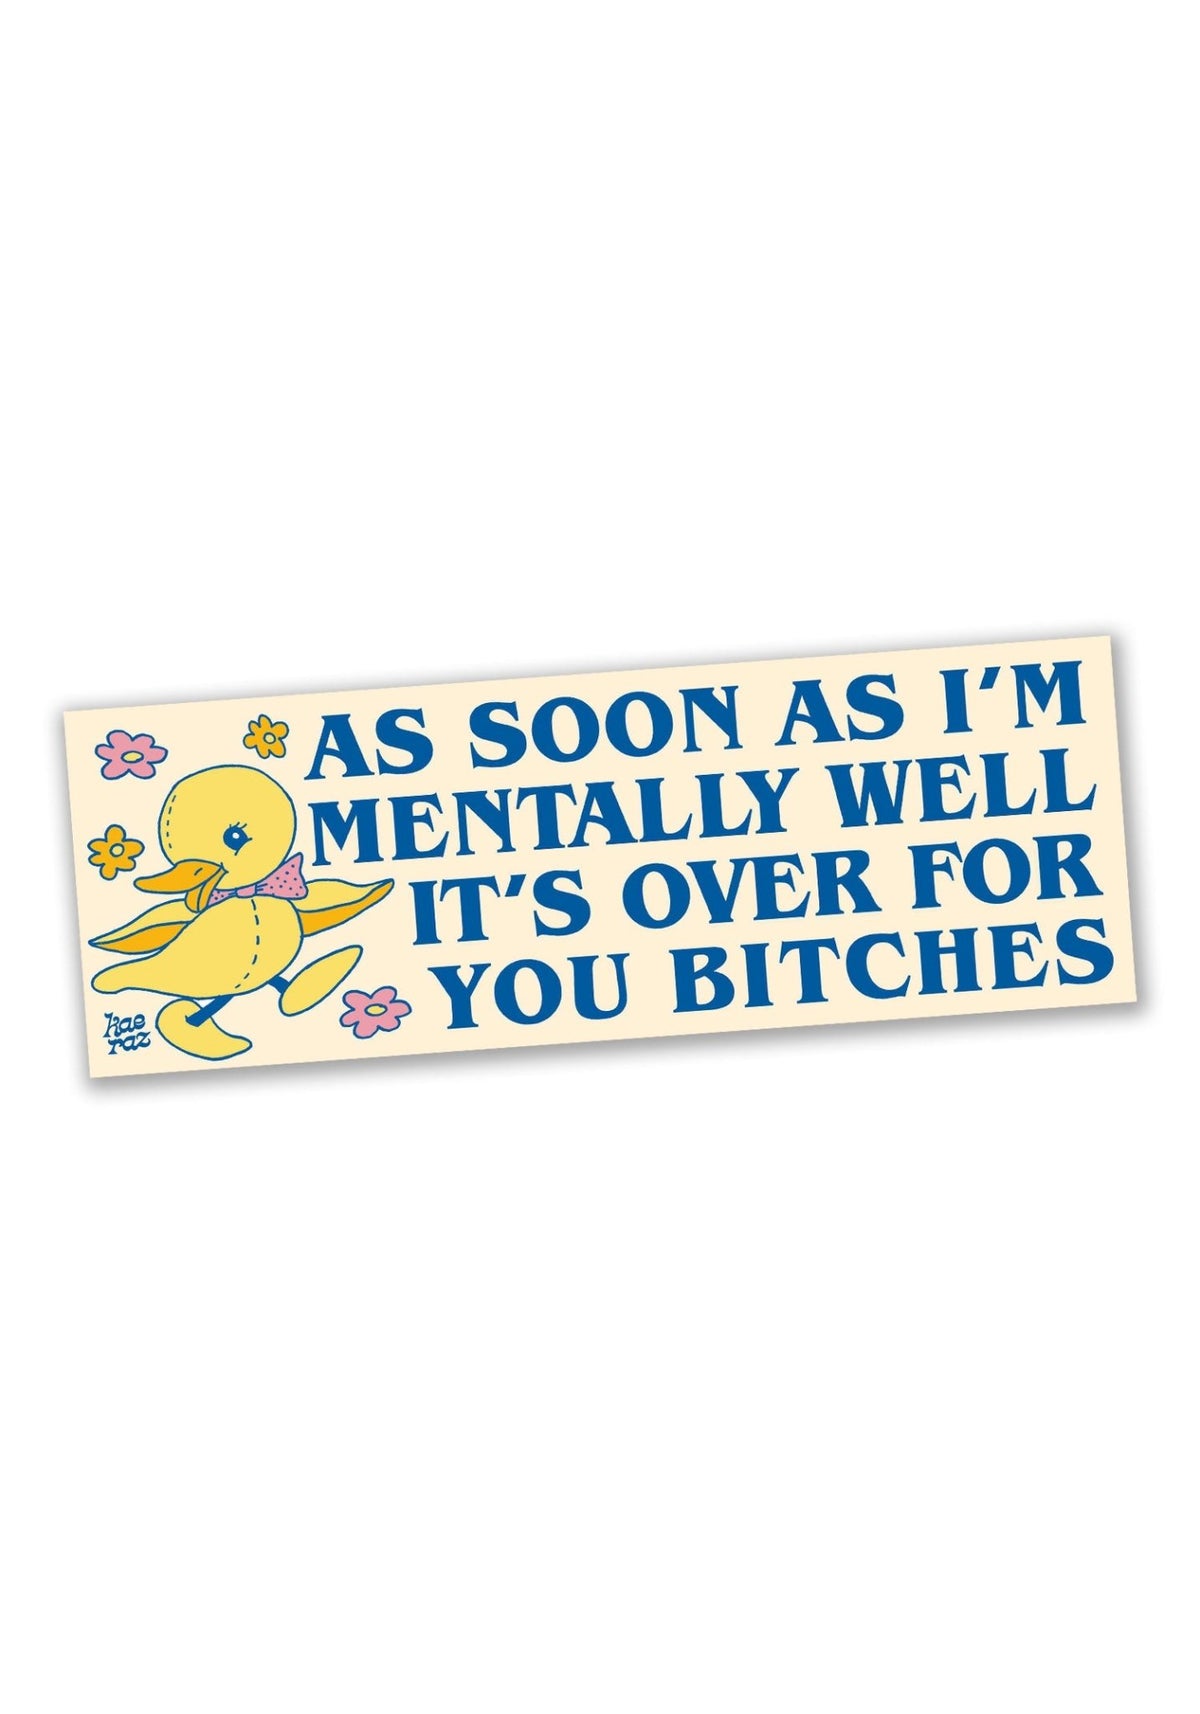 Mentally Well Duckie Bumper Sticker by kaeraz bitches duck duckling